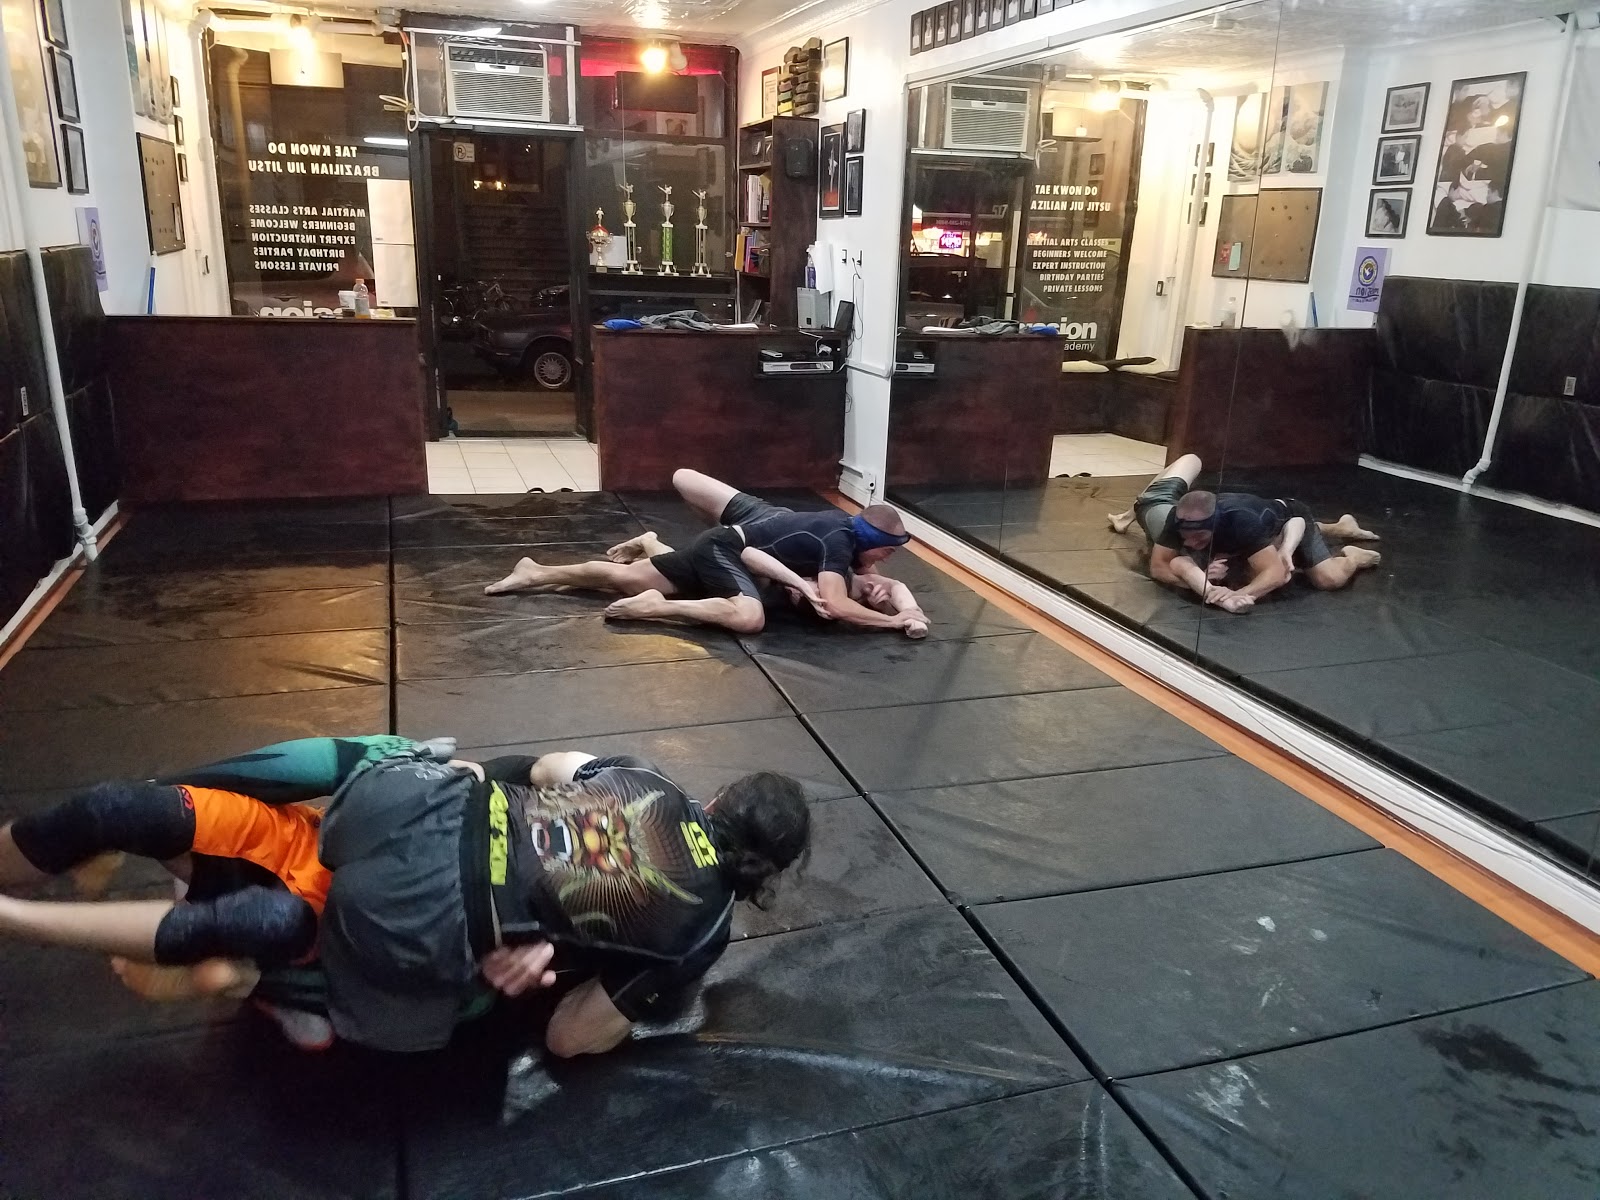 Photo of Zero "G" Brazilian Jiu Jitsu in Kings County City, New York, United States - 4 Picture of Point of interest, Establishment, Store, Health